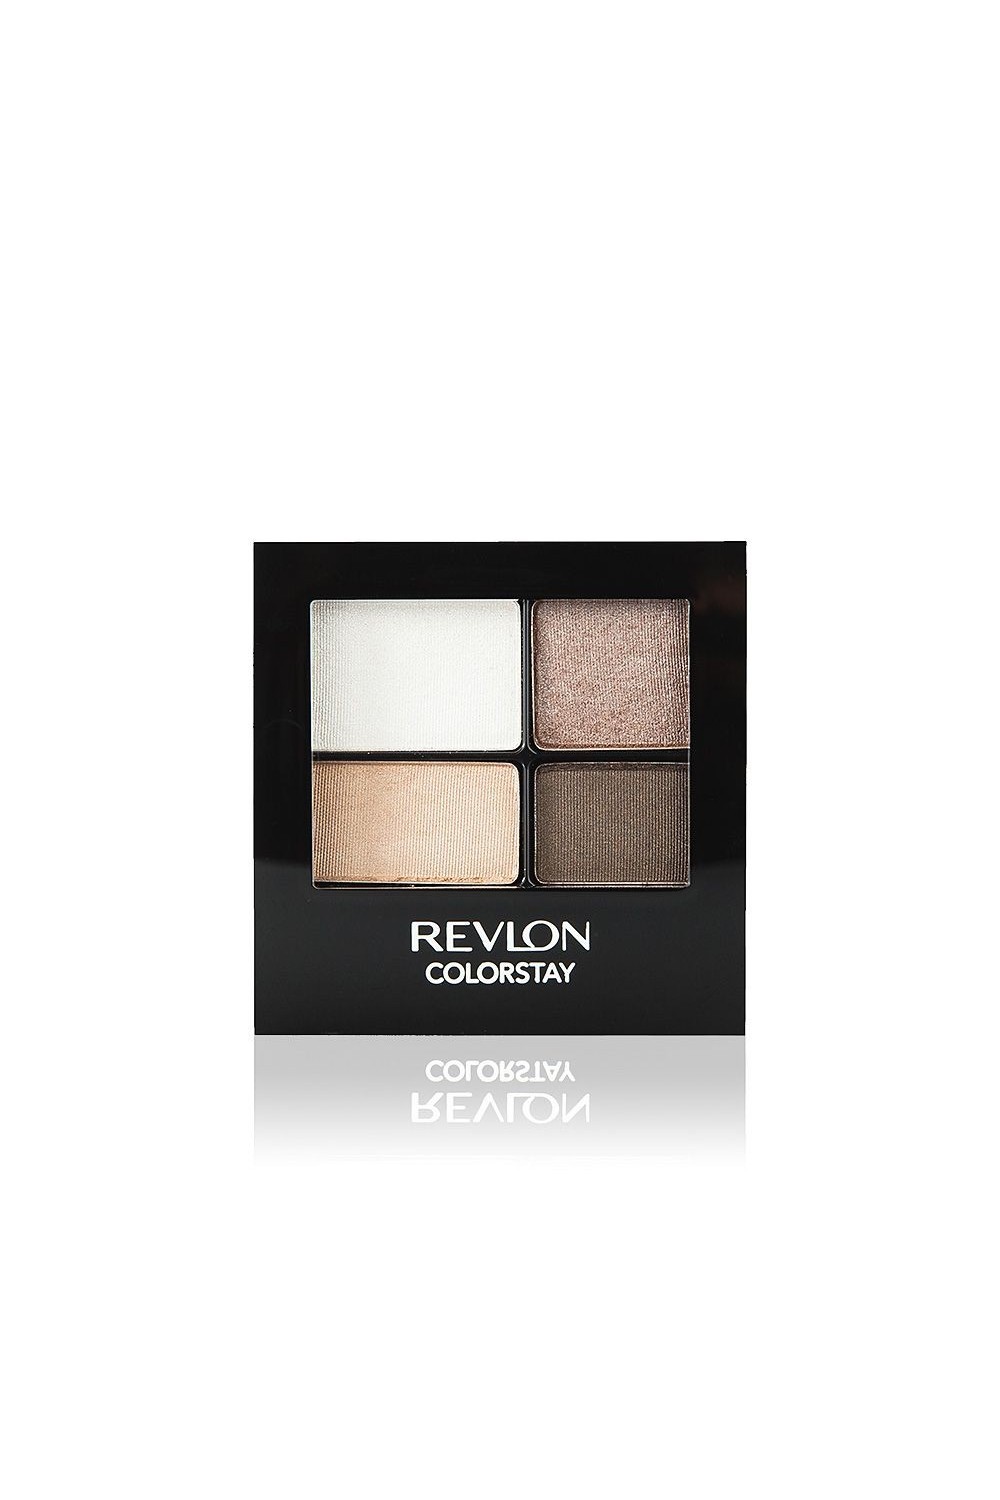 Revlon Colorstay 16 Hour Eye Shadow 555 Moonlite 4,8g